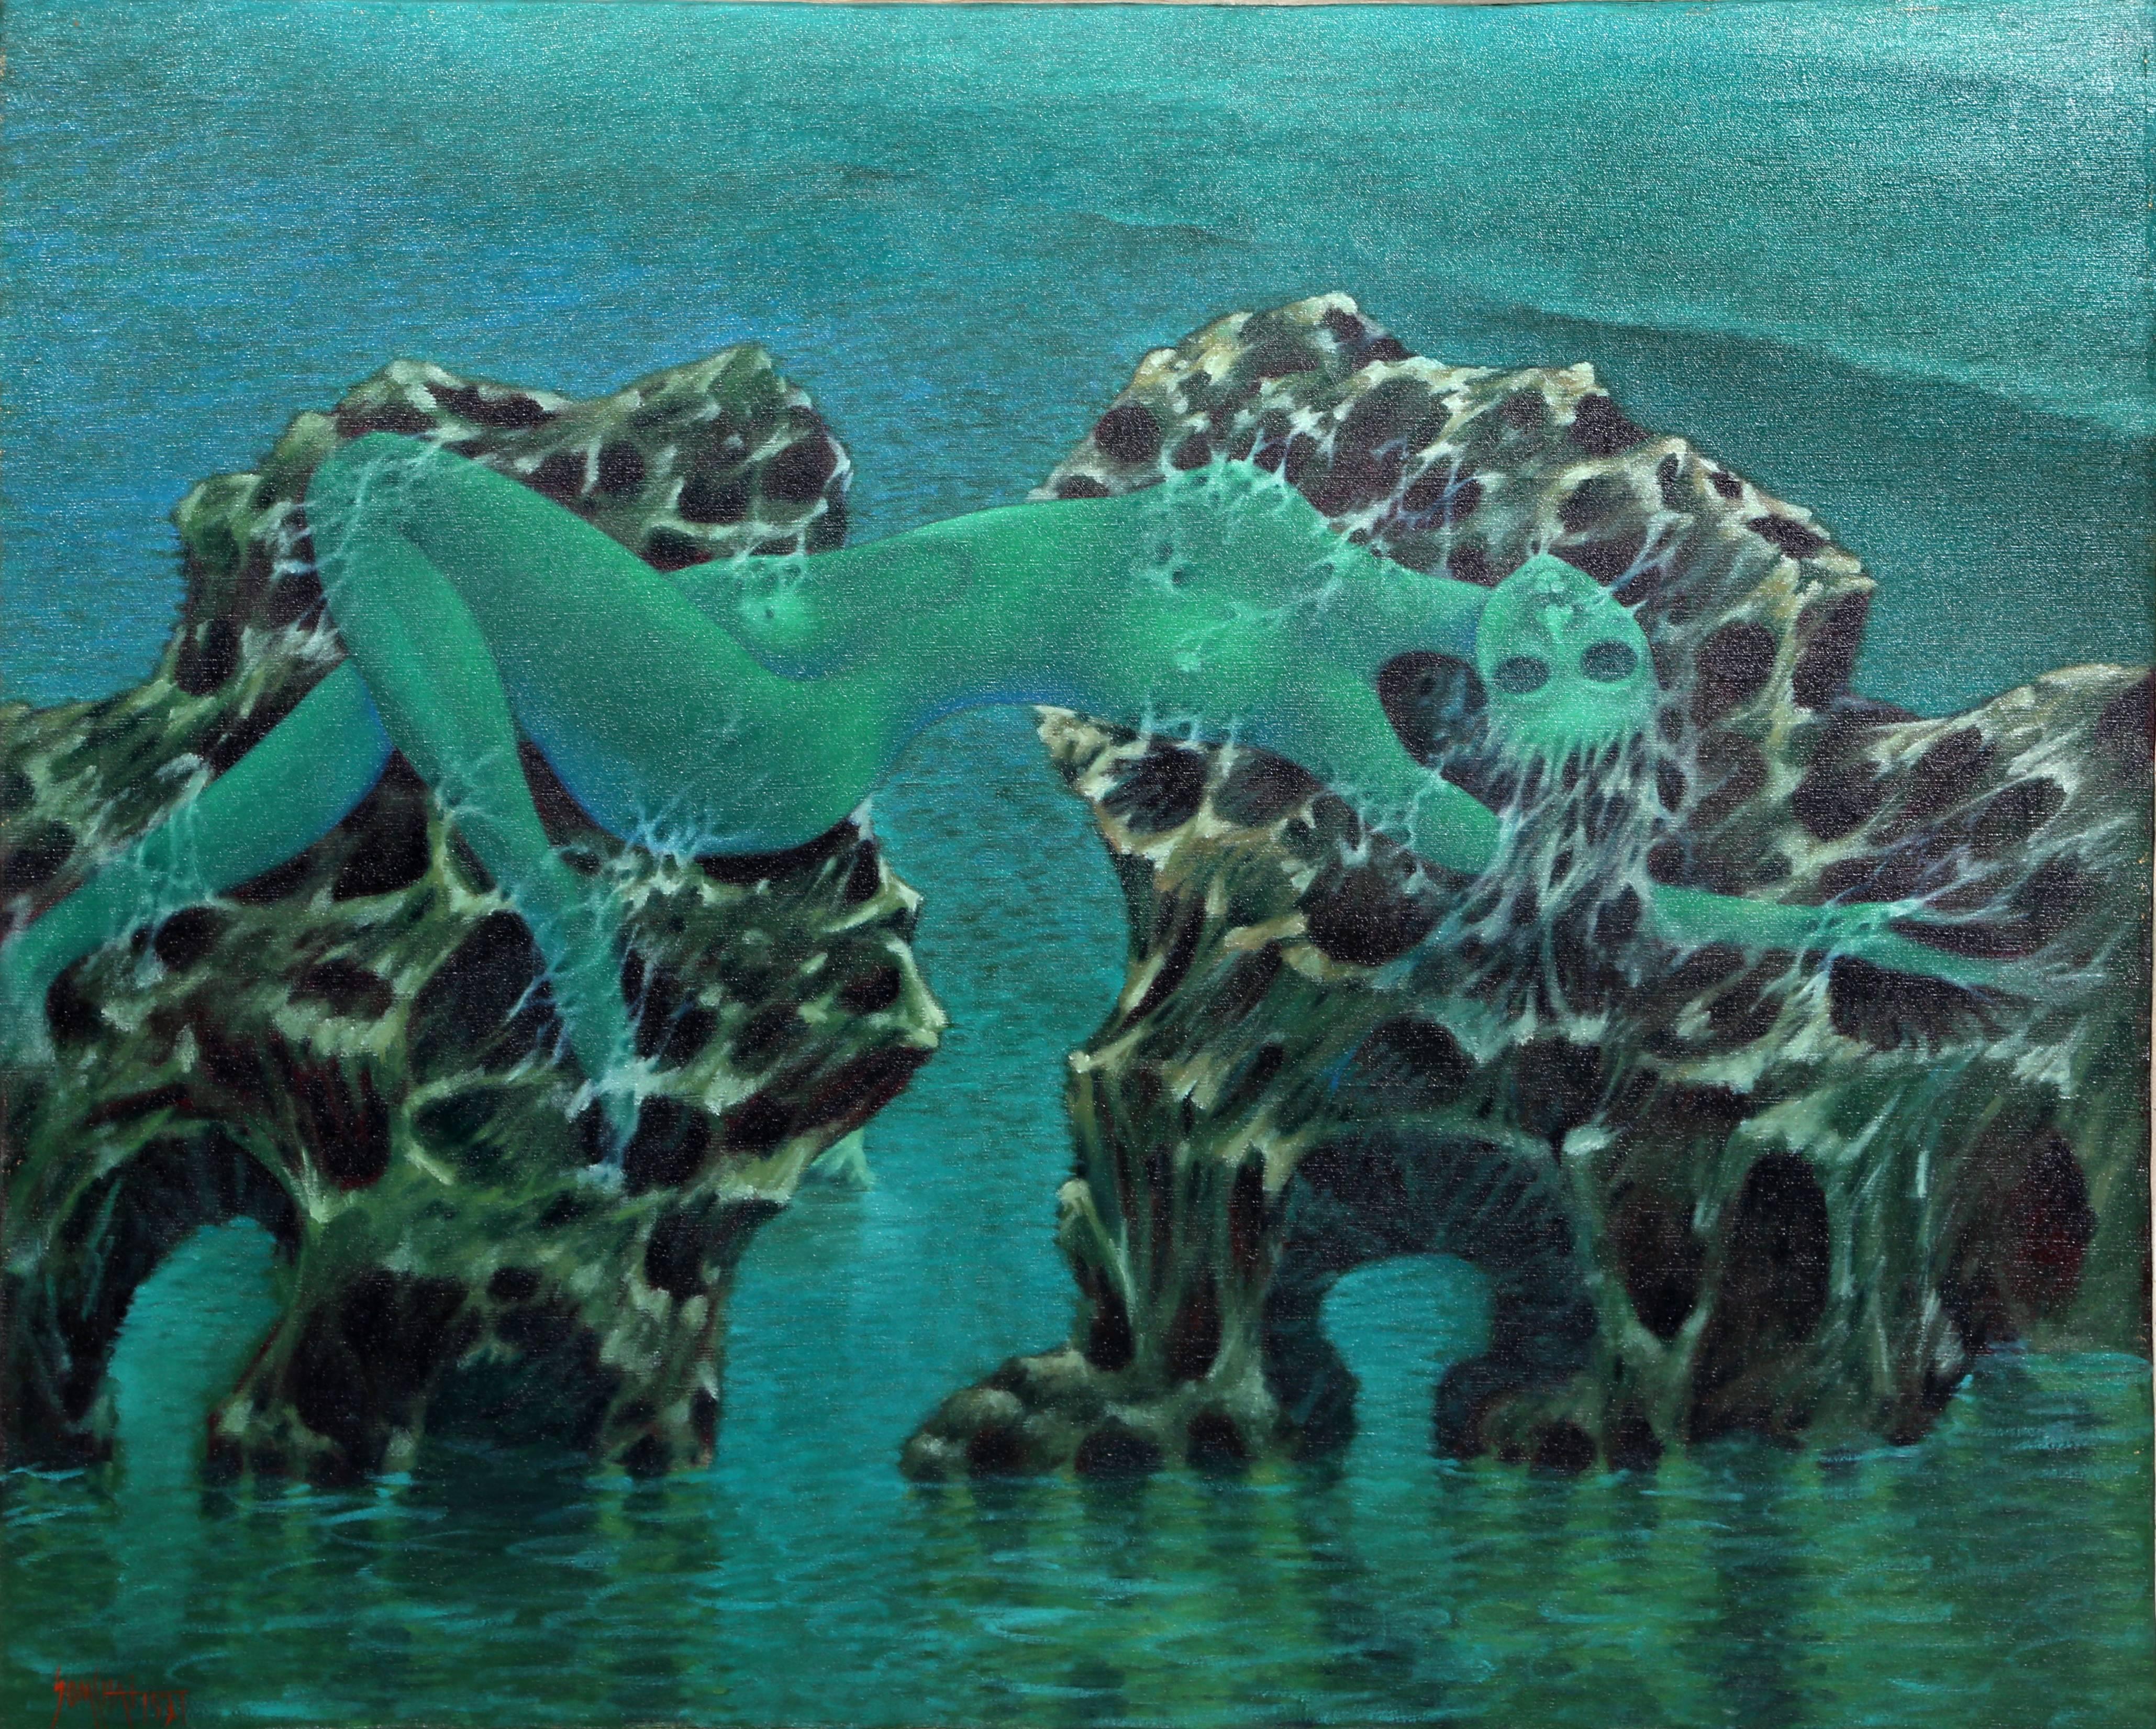 Artist: Hattakitkosol Somchai, Thai (1934 - 2000)
Title: Green Virgin
Year: 1970
Medium: Oil on Canvas, signed l.l.
Size: 27.5 x 31.5 in. (69.85 x 80.01 cm)